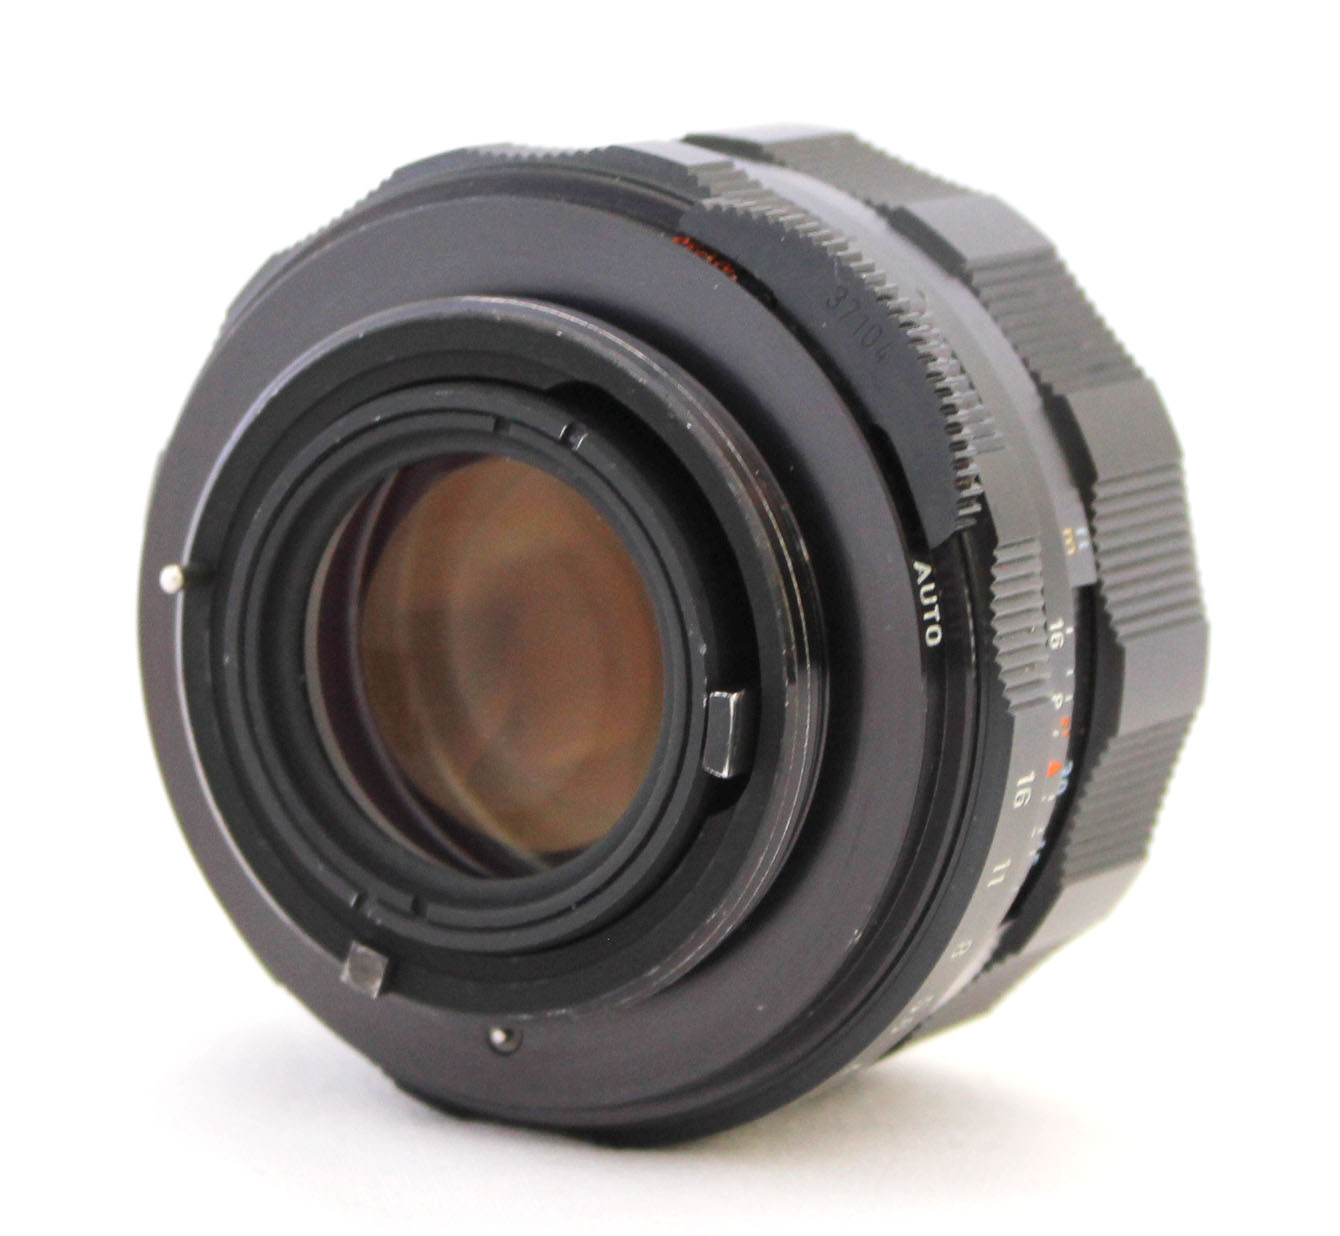 Asahi Pentax Spotmatic F SPF 35mm SLR Camera Black w/ SMC Super-Multi-Coated Takumar 55mm F/1.8 Lens from Japan Photo 12